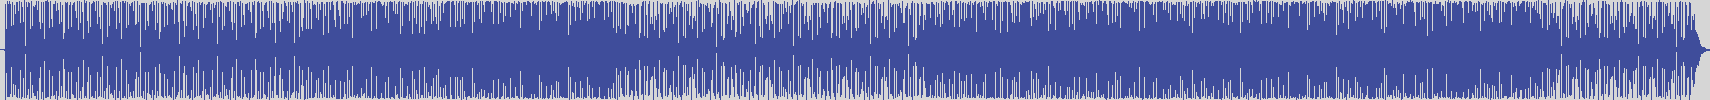 nf_boyz_records [NFY074] Ares Cerrato - Tax Set [Original Mix] audio wave form